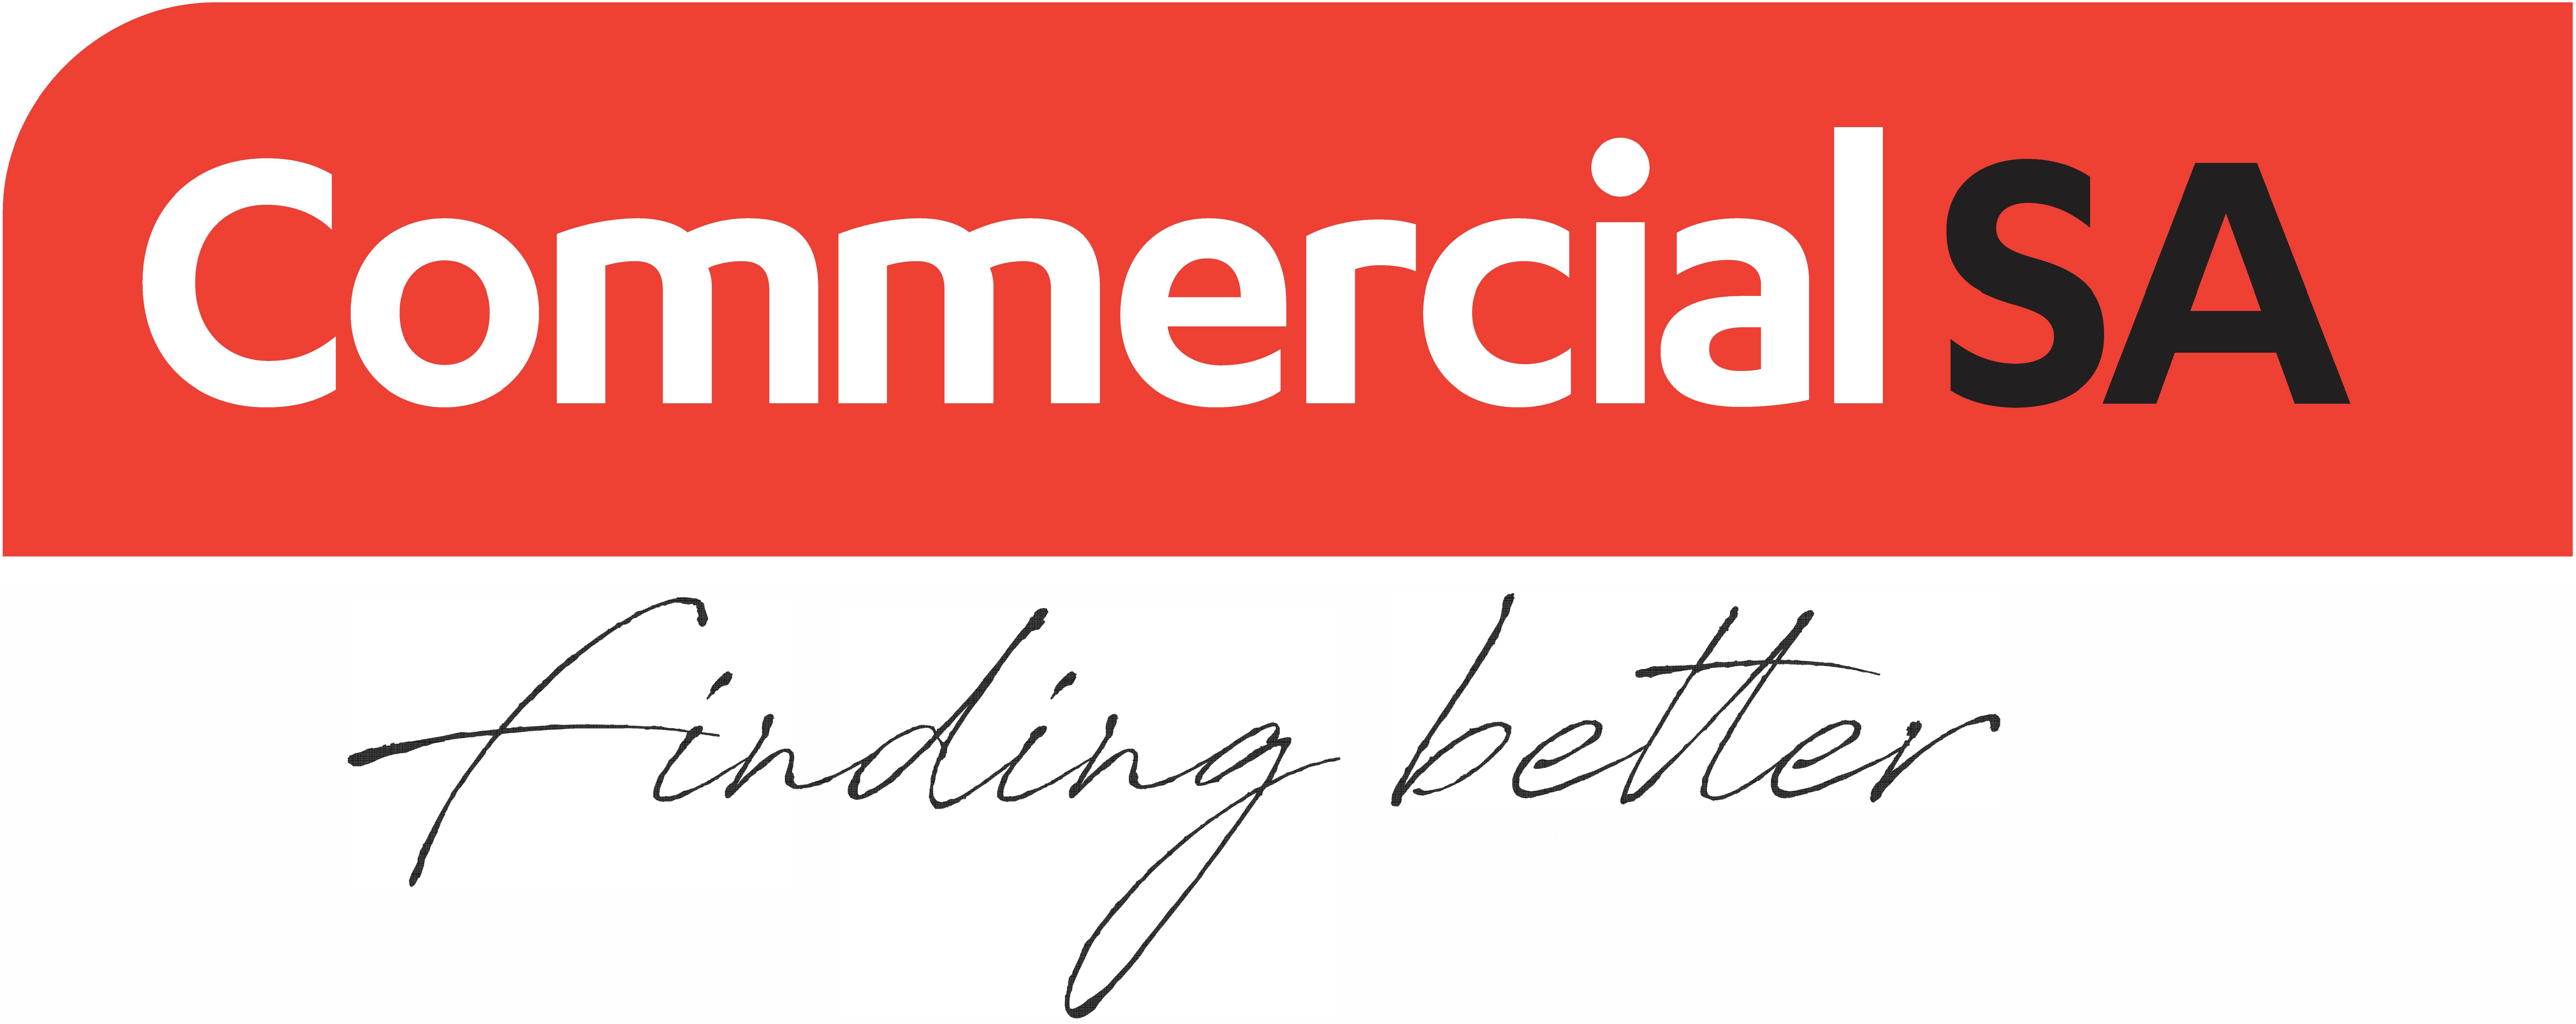 Commercial SA Logo - re-sizable